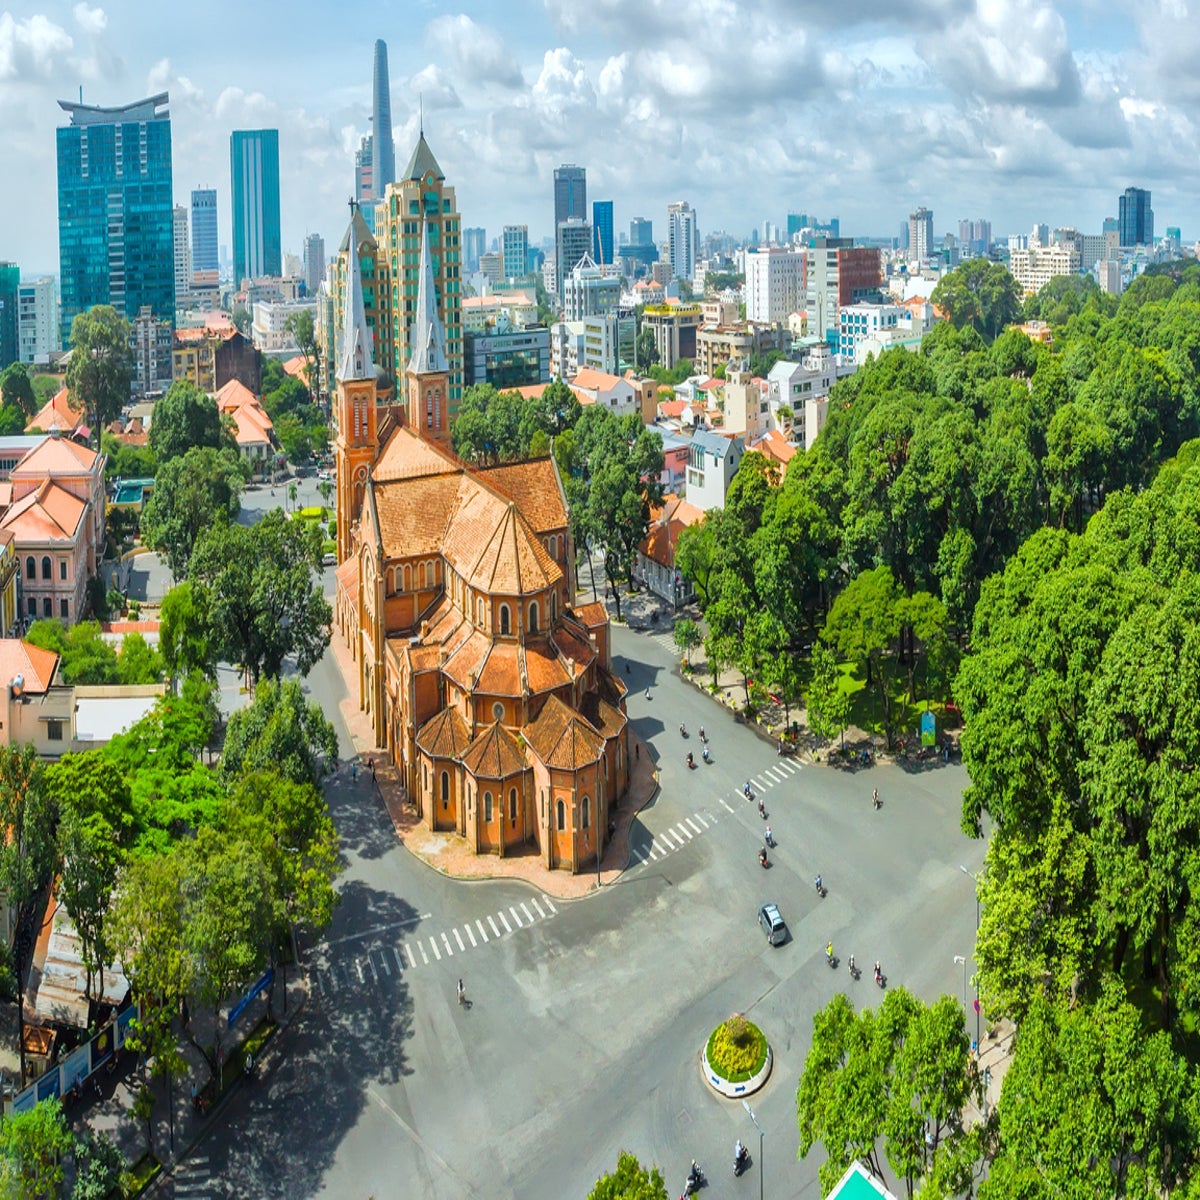 Royal City Hanoi - European-style urban complex right in Vietnam